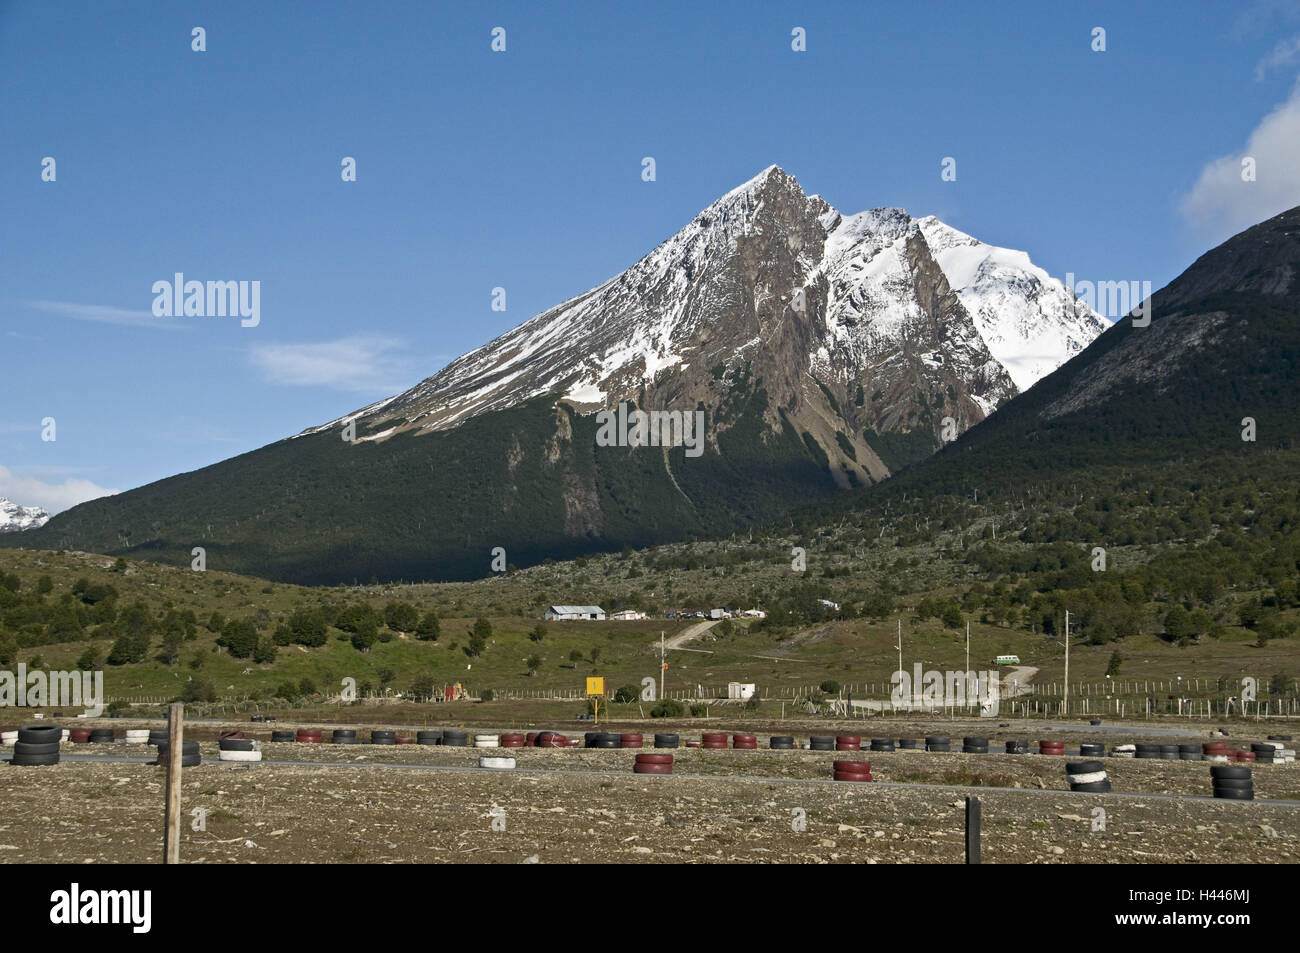 Argentina, Tierra del Fuego, Usuhuaia, the Andes mountain range, Stock Photo